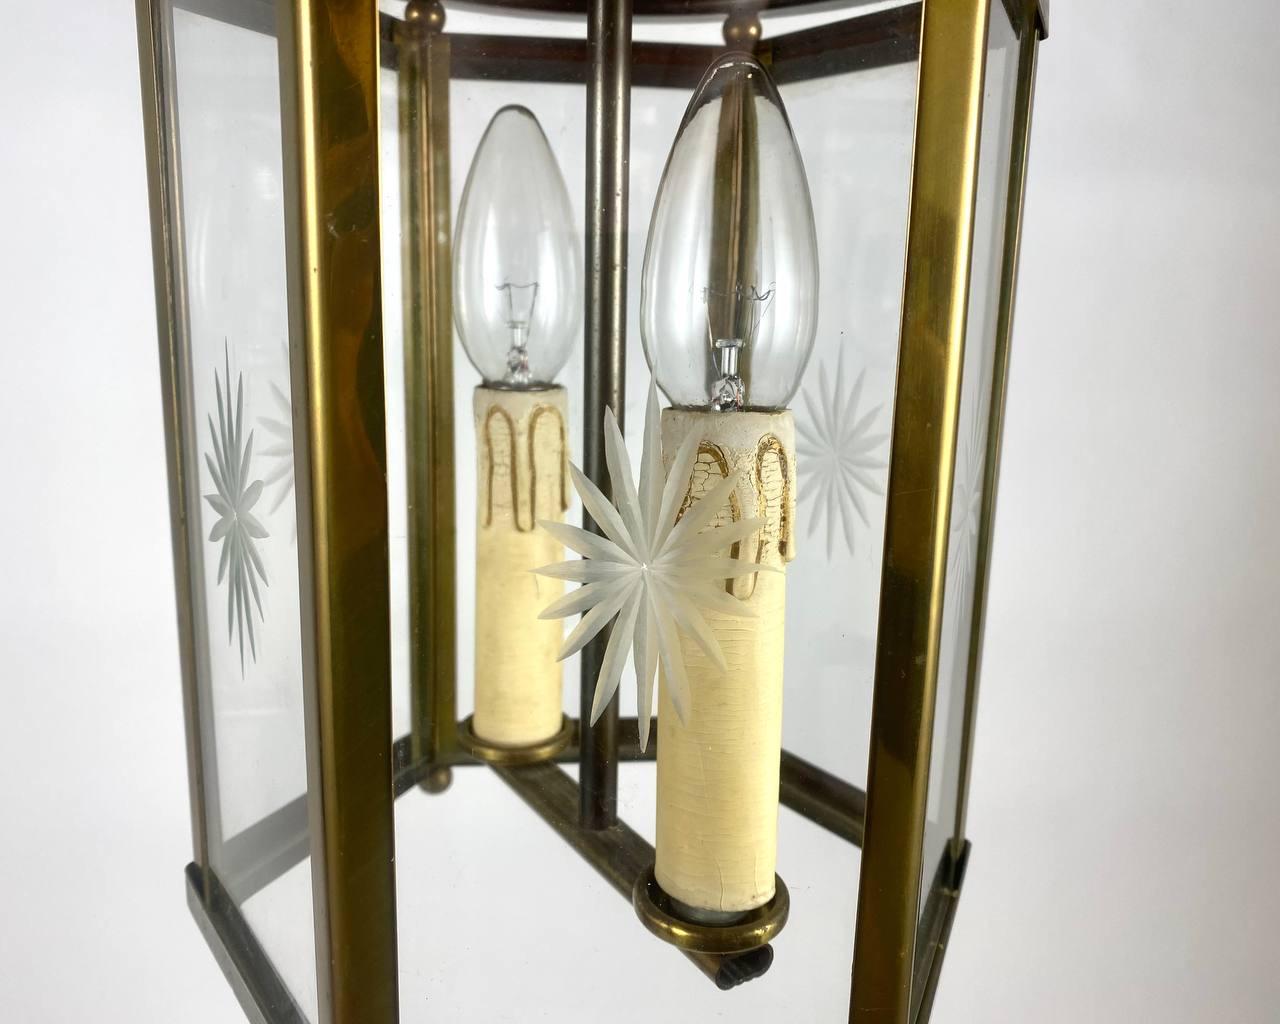 Brass Art Nouveau Lantern with Glass Panels Vintage Lighting For Sale 2